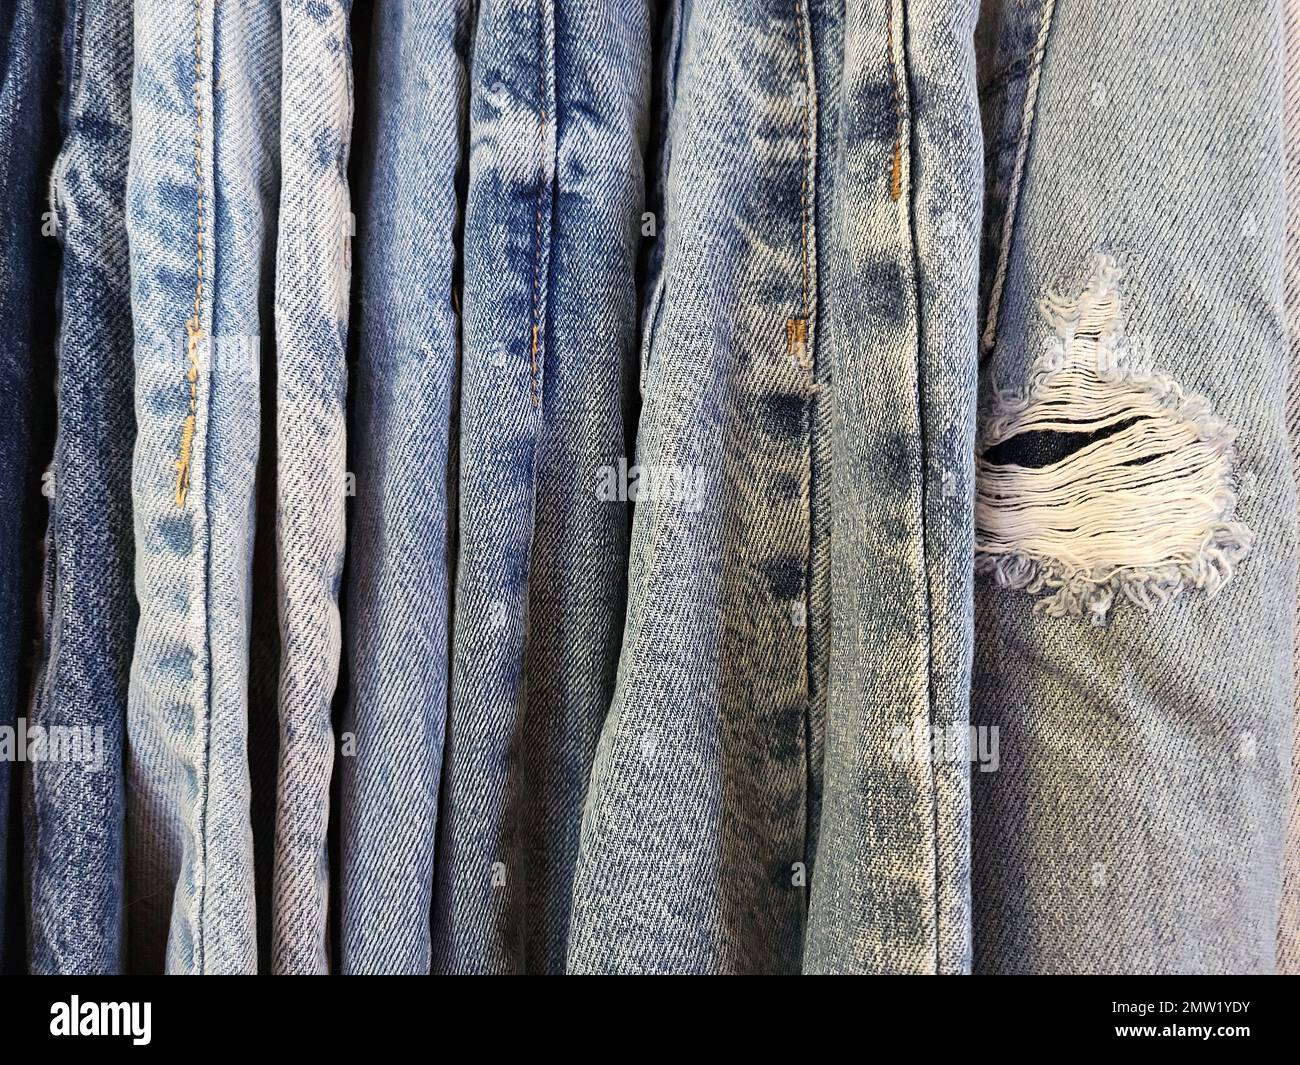 Primer plano de jeans azules desgastados con un agujero deshilachado Foto de stock